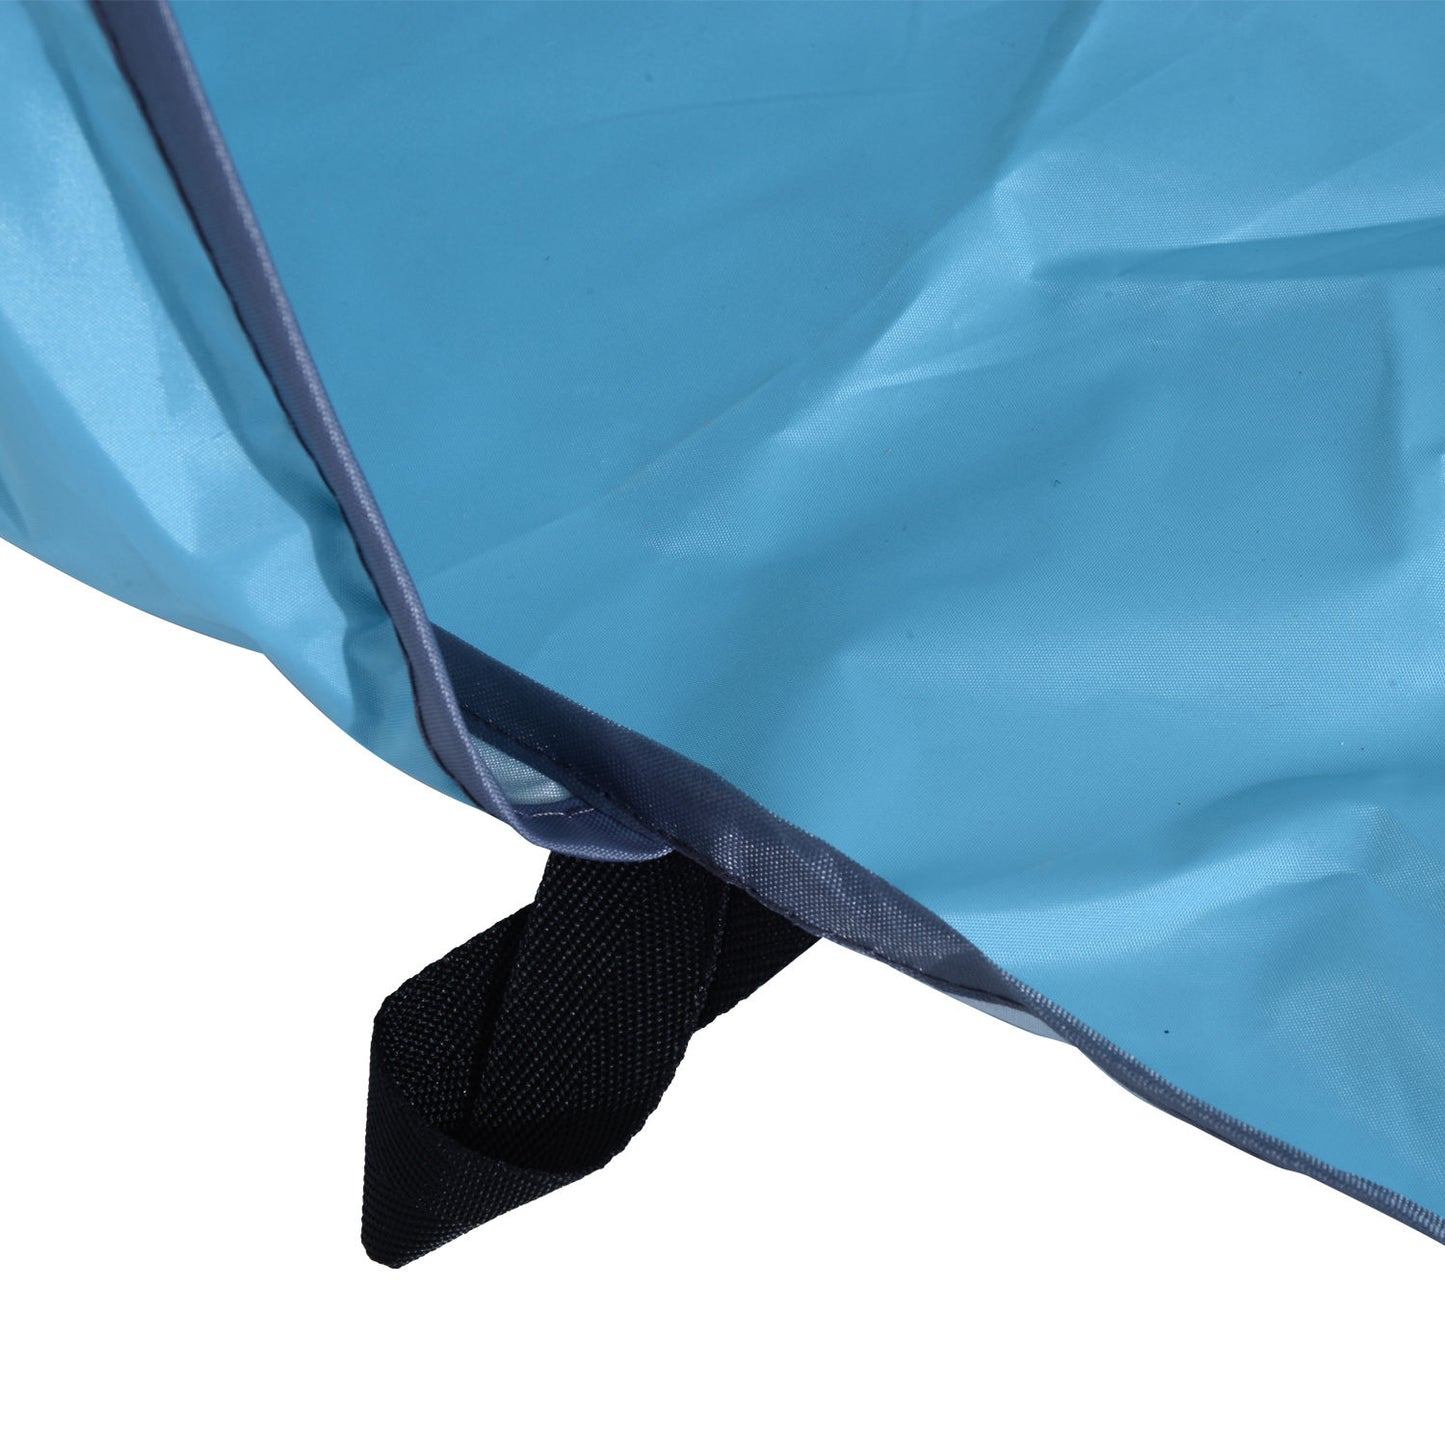 Nancy's Cedar Bank Throw Tent - Blauw - Polyester, Staal - 59,06 cm x 78,74 cm x 45,28 cm